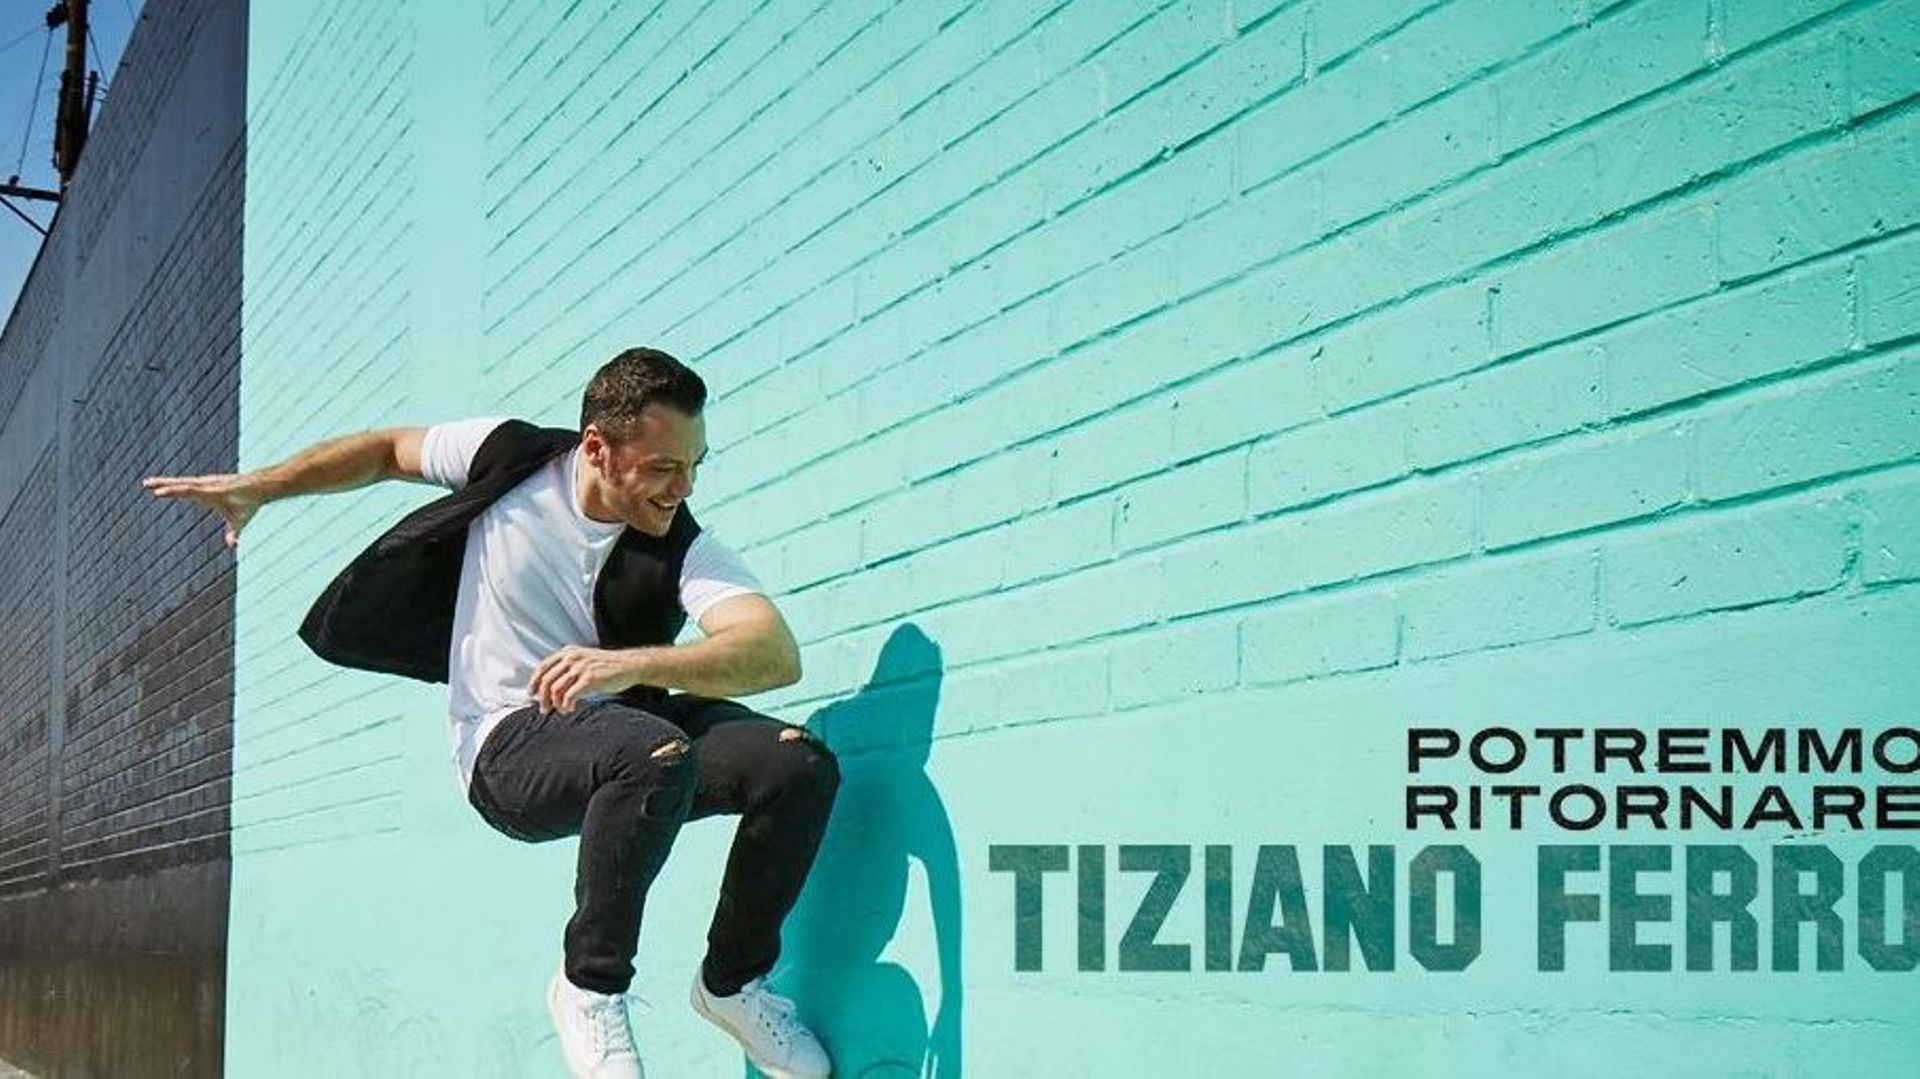 Tiziano Ferro met fin à 5 années de silence radio !